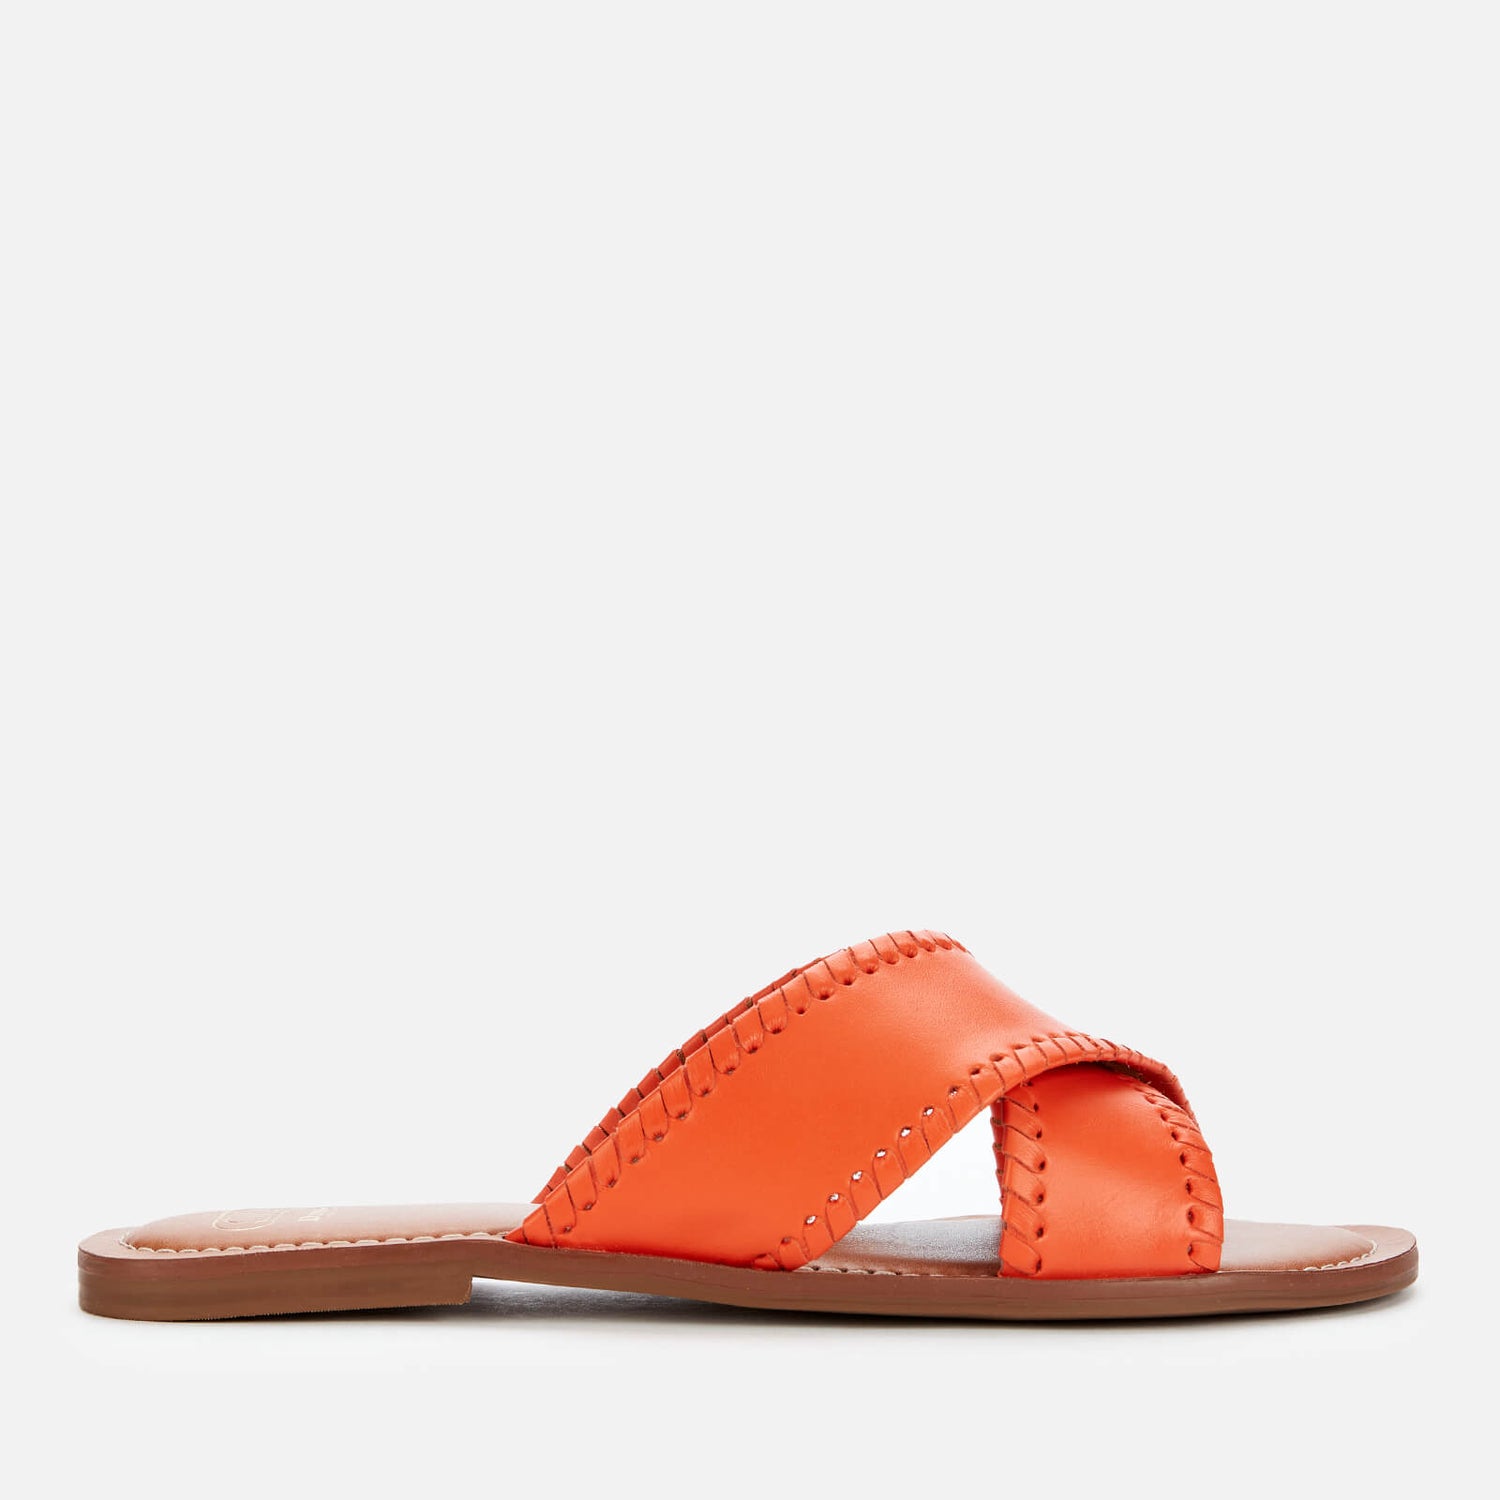 Dune Women's Lindsy Leather Flat Sandals - Orange